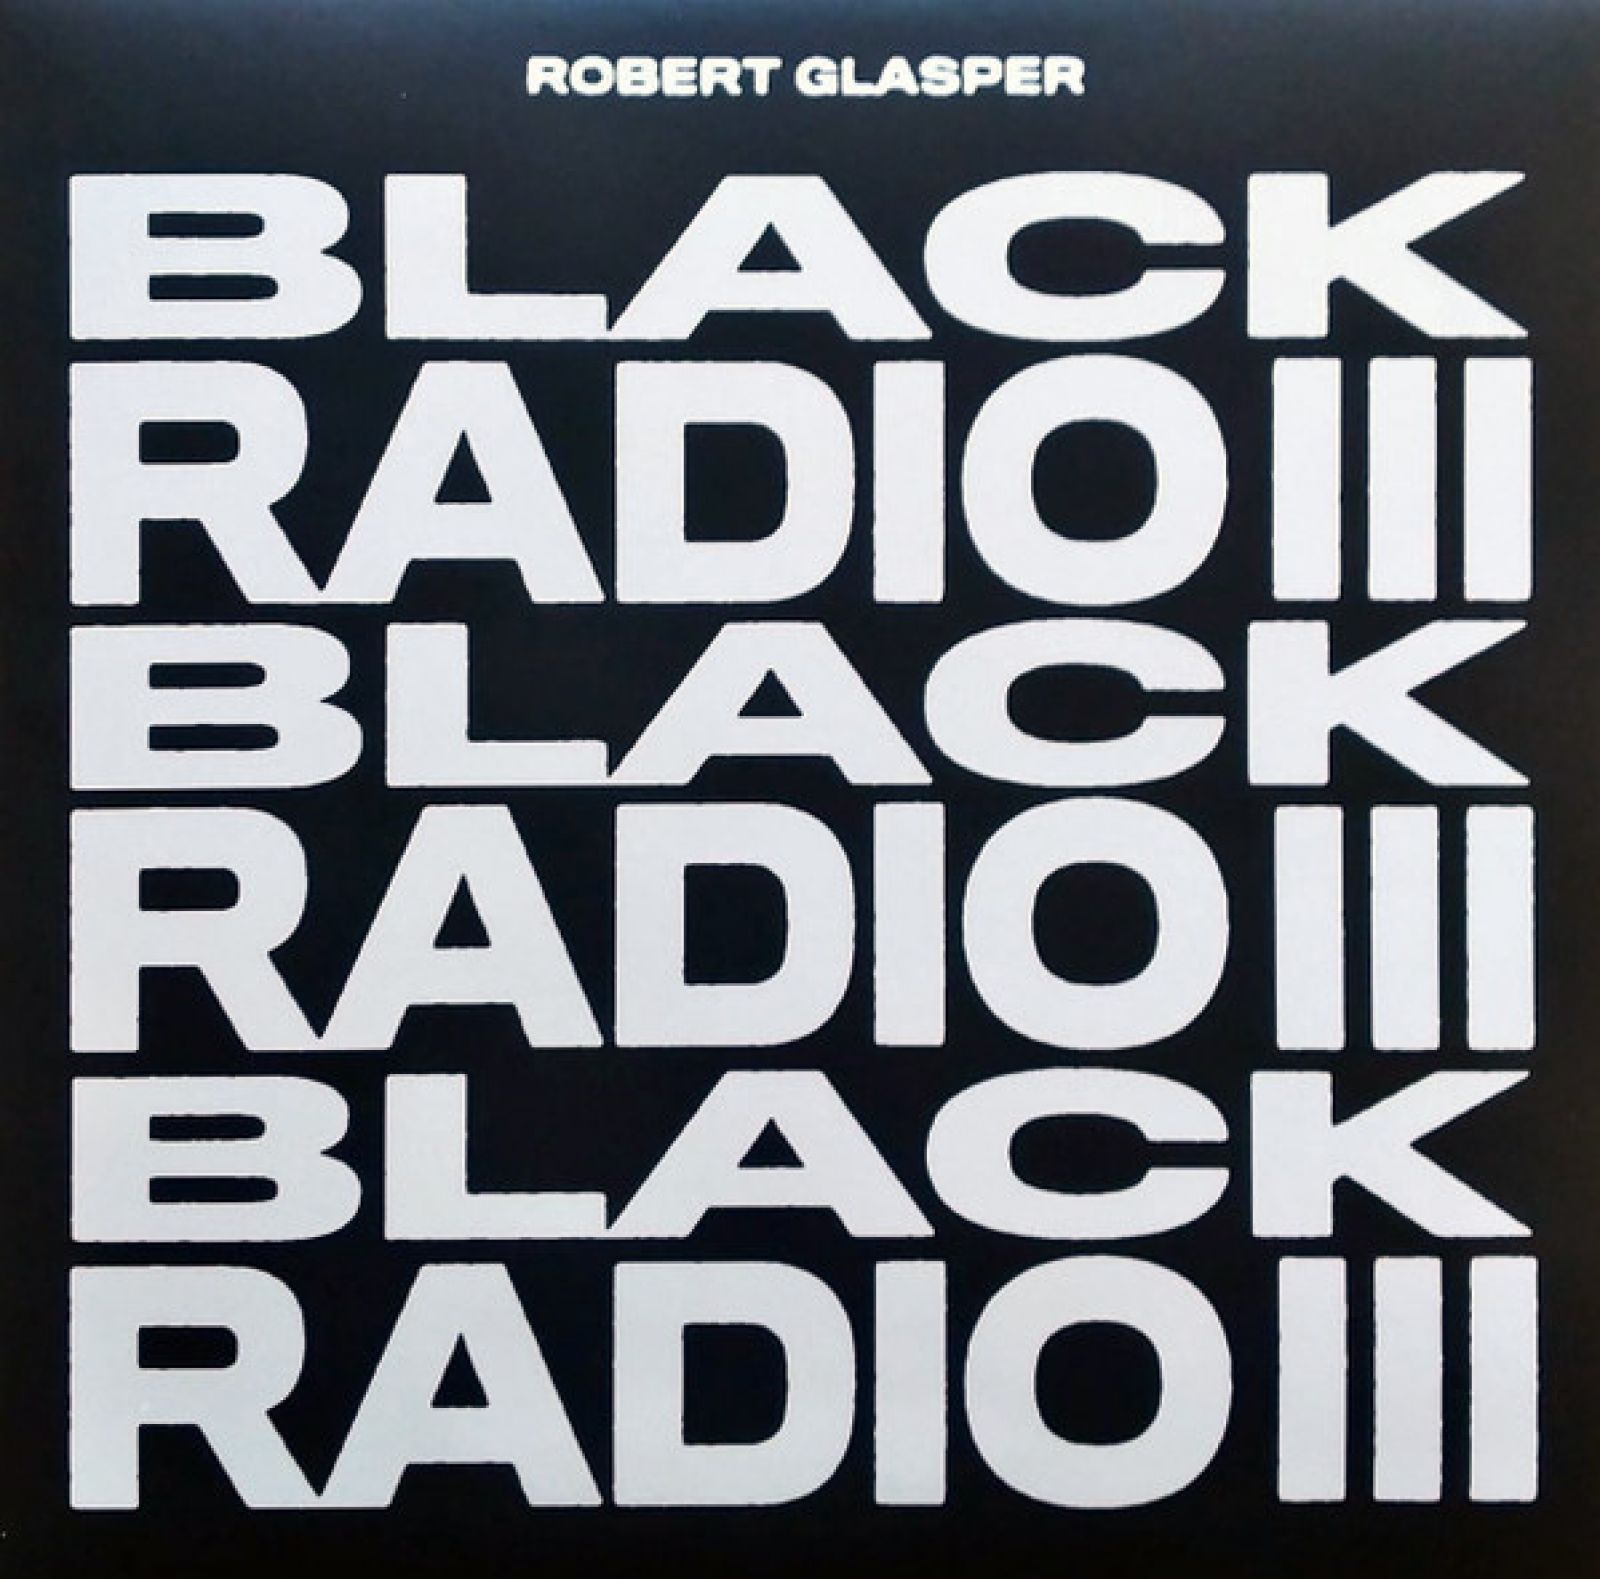 Виниловая пластинка Glasper, Robert, Black Radio III (0888072400313) виниловая пластинка glasper robert in my element 0602455077165